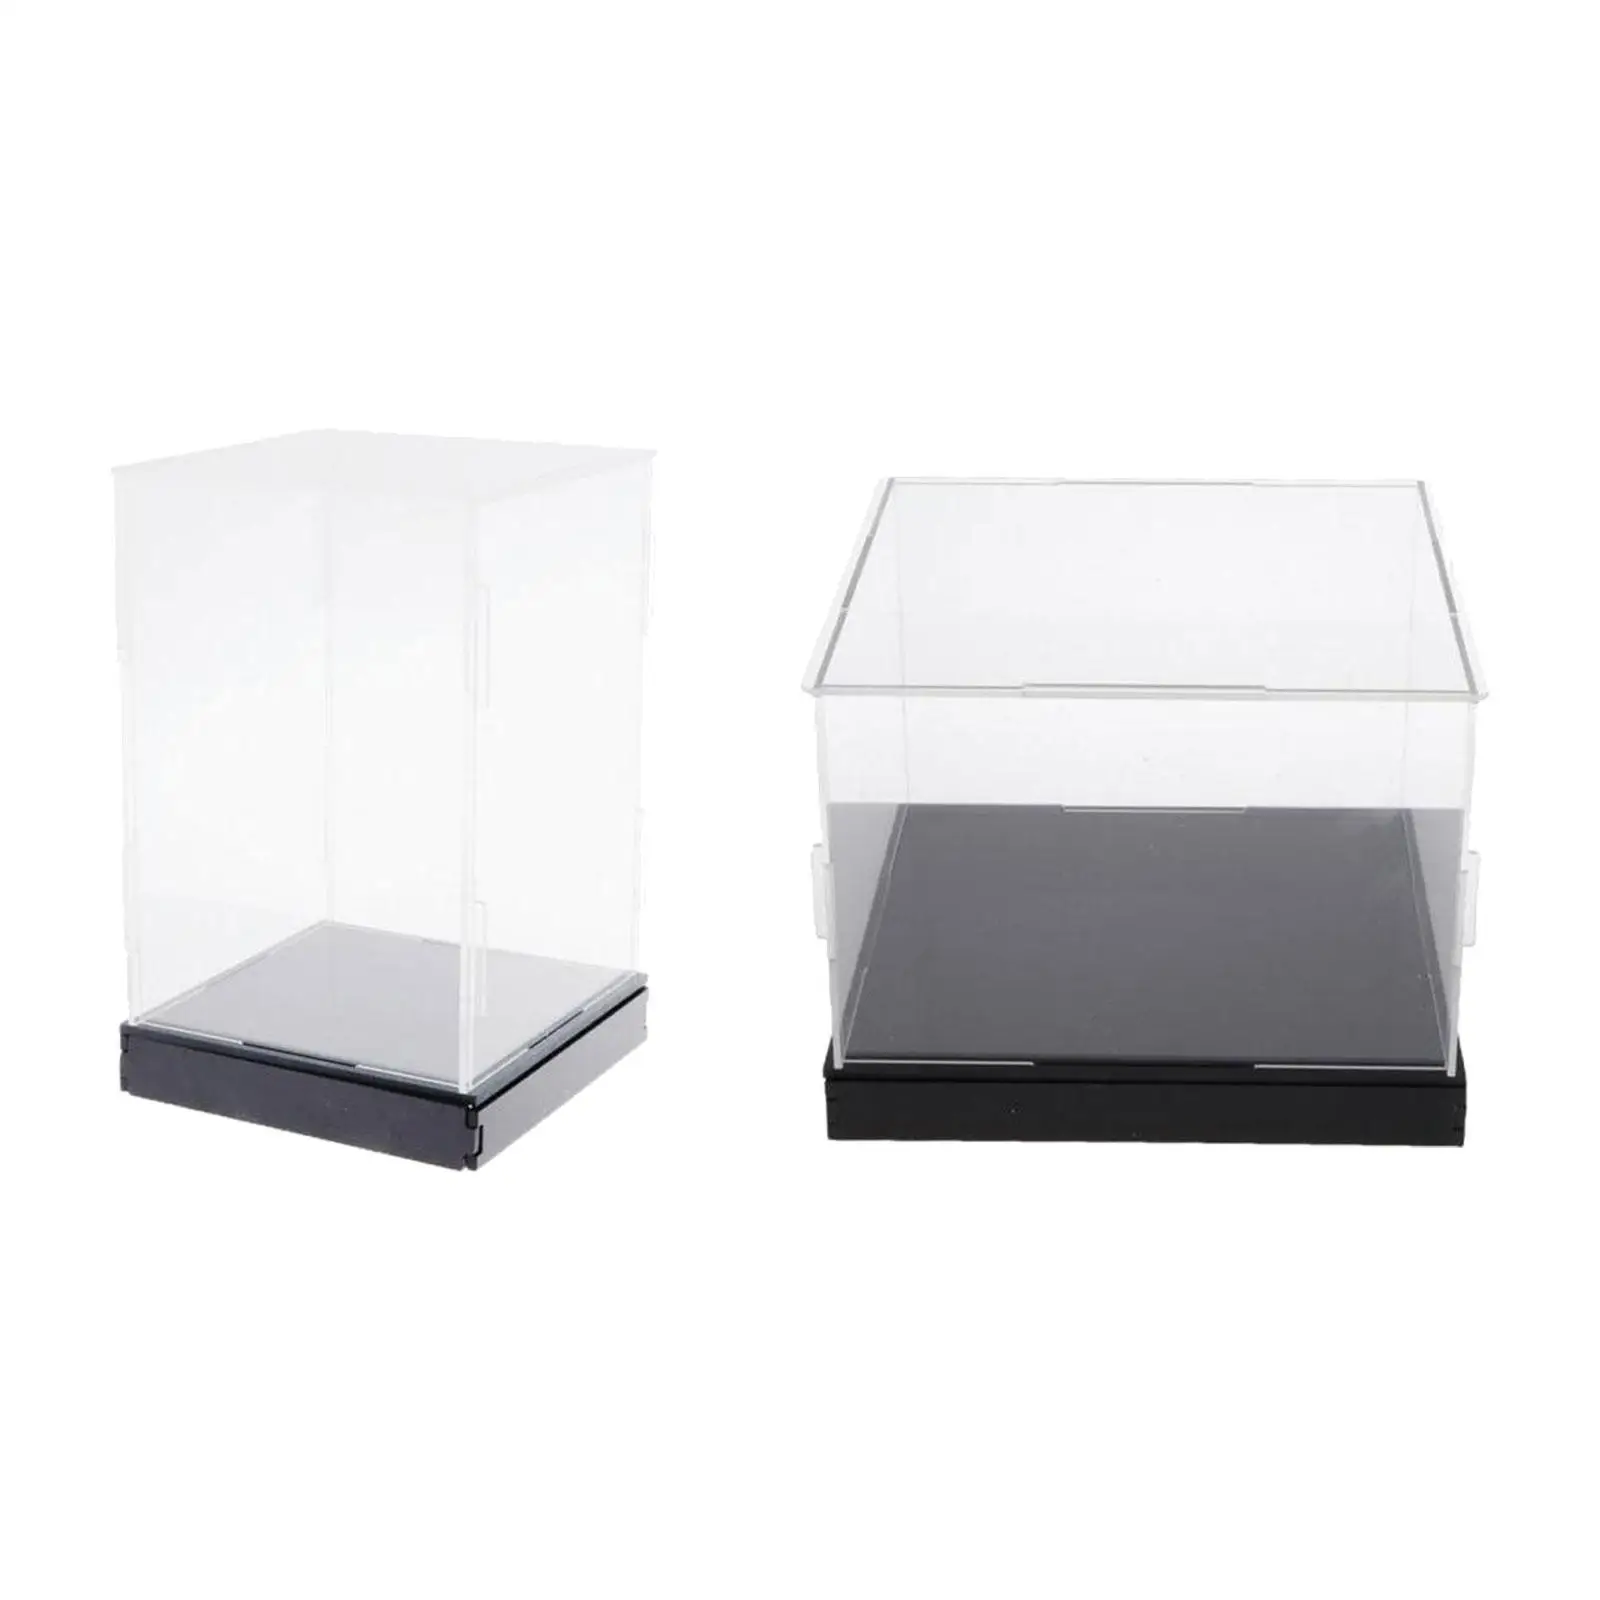 2pcs Clear Acrylic Display Box Dustproof Figure Toy Model Case